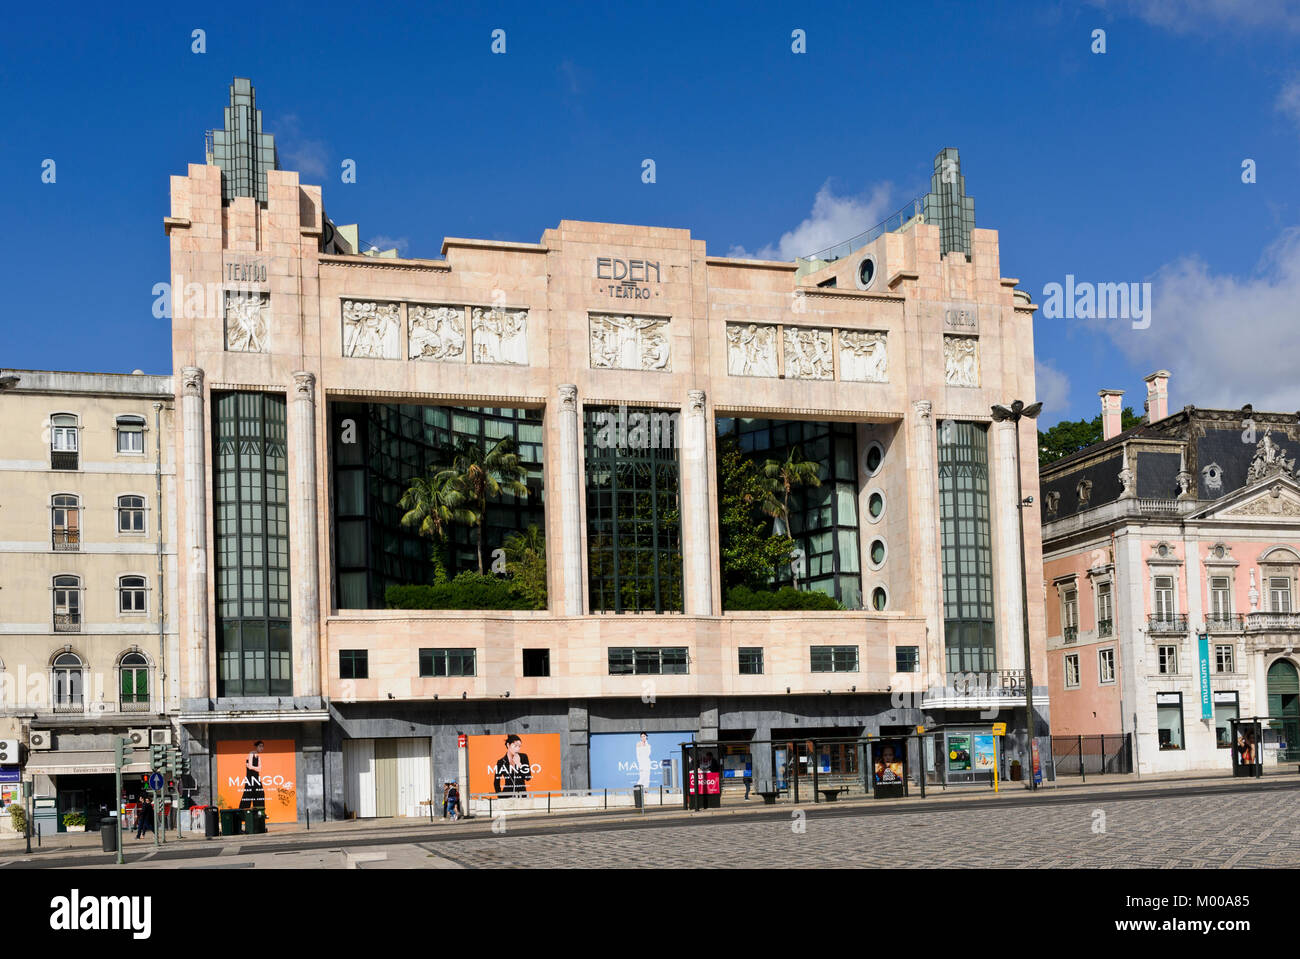 Eden Teatro (Cinema/Theatre), Lisbon, Portugal. It opened in 1931 and was  designed by architects Cassiano Branco and Carlo Florencio Dias Stock Photo  - Alamy